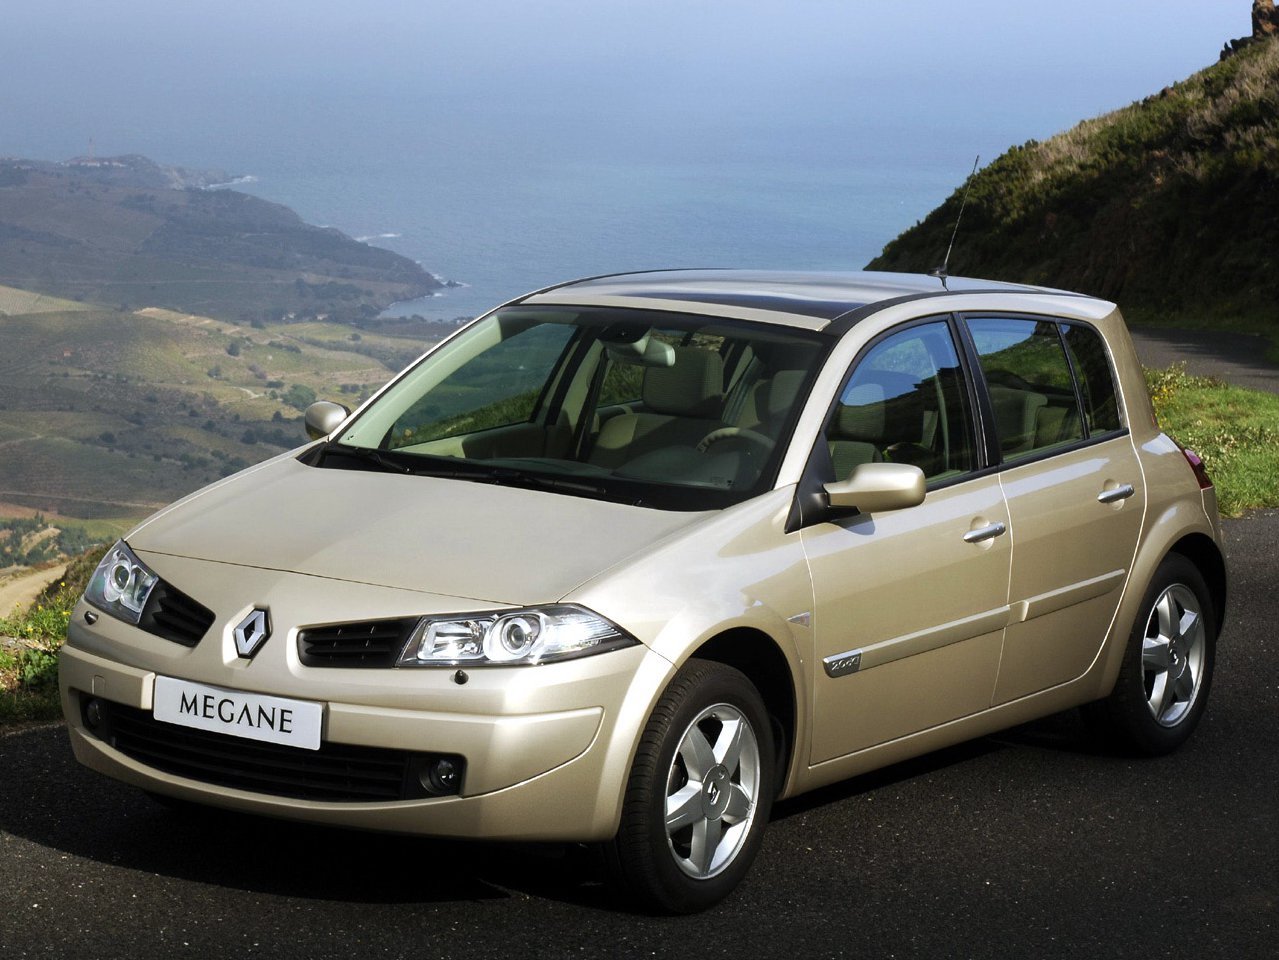 Renault Megane 2006 - 2009